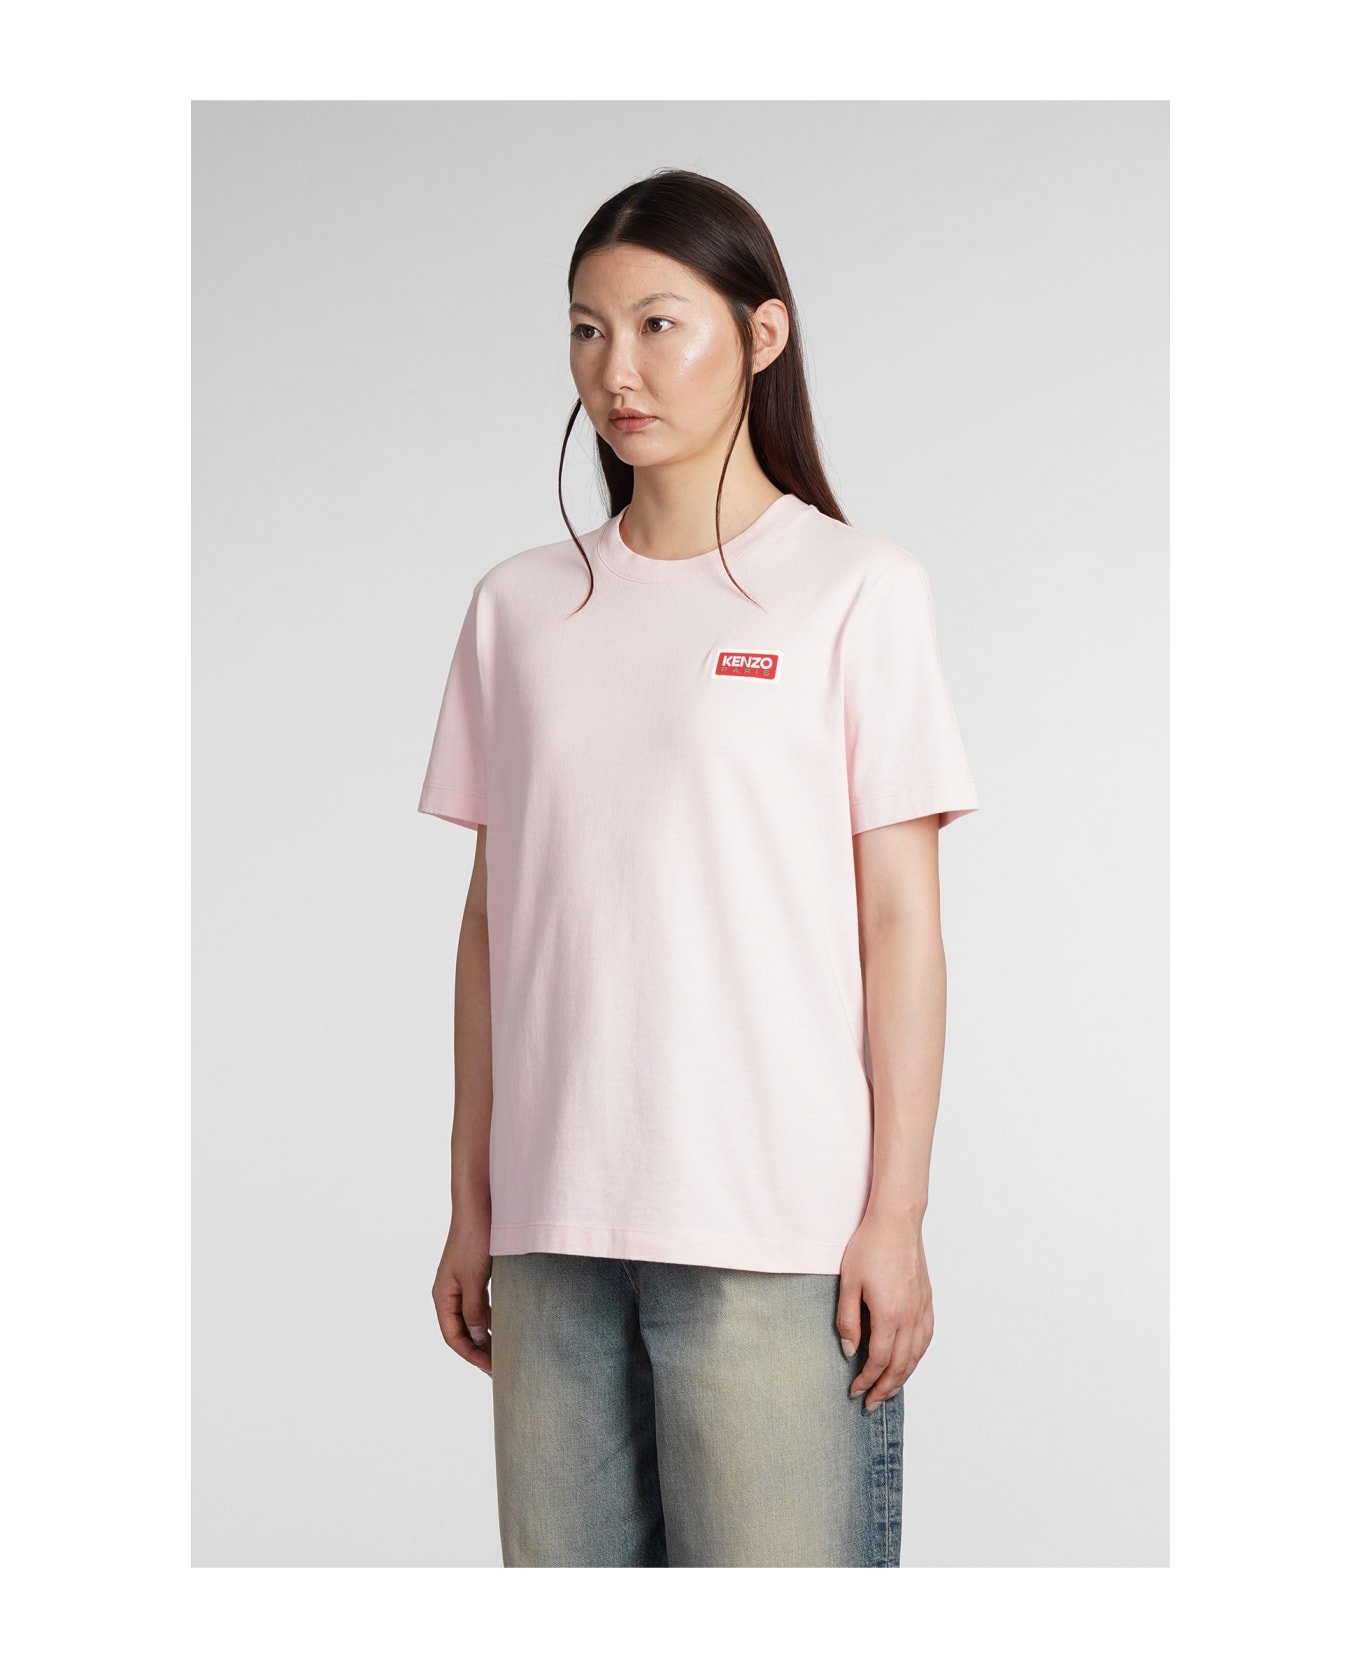 Kenzo Paris T-shirt - Pink Tシャツ